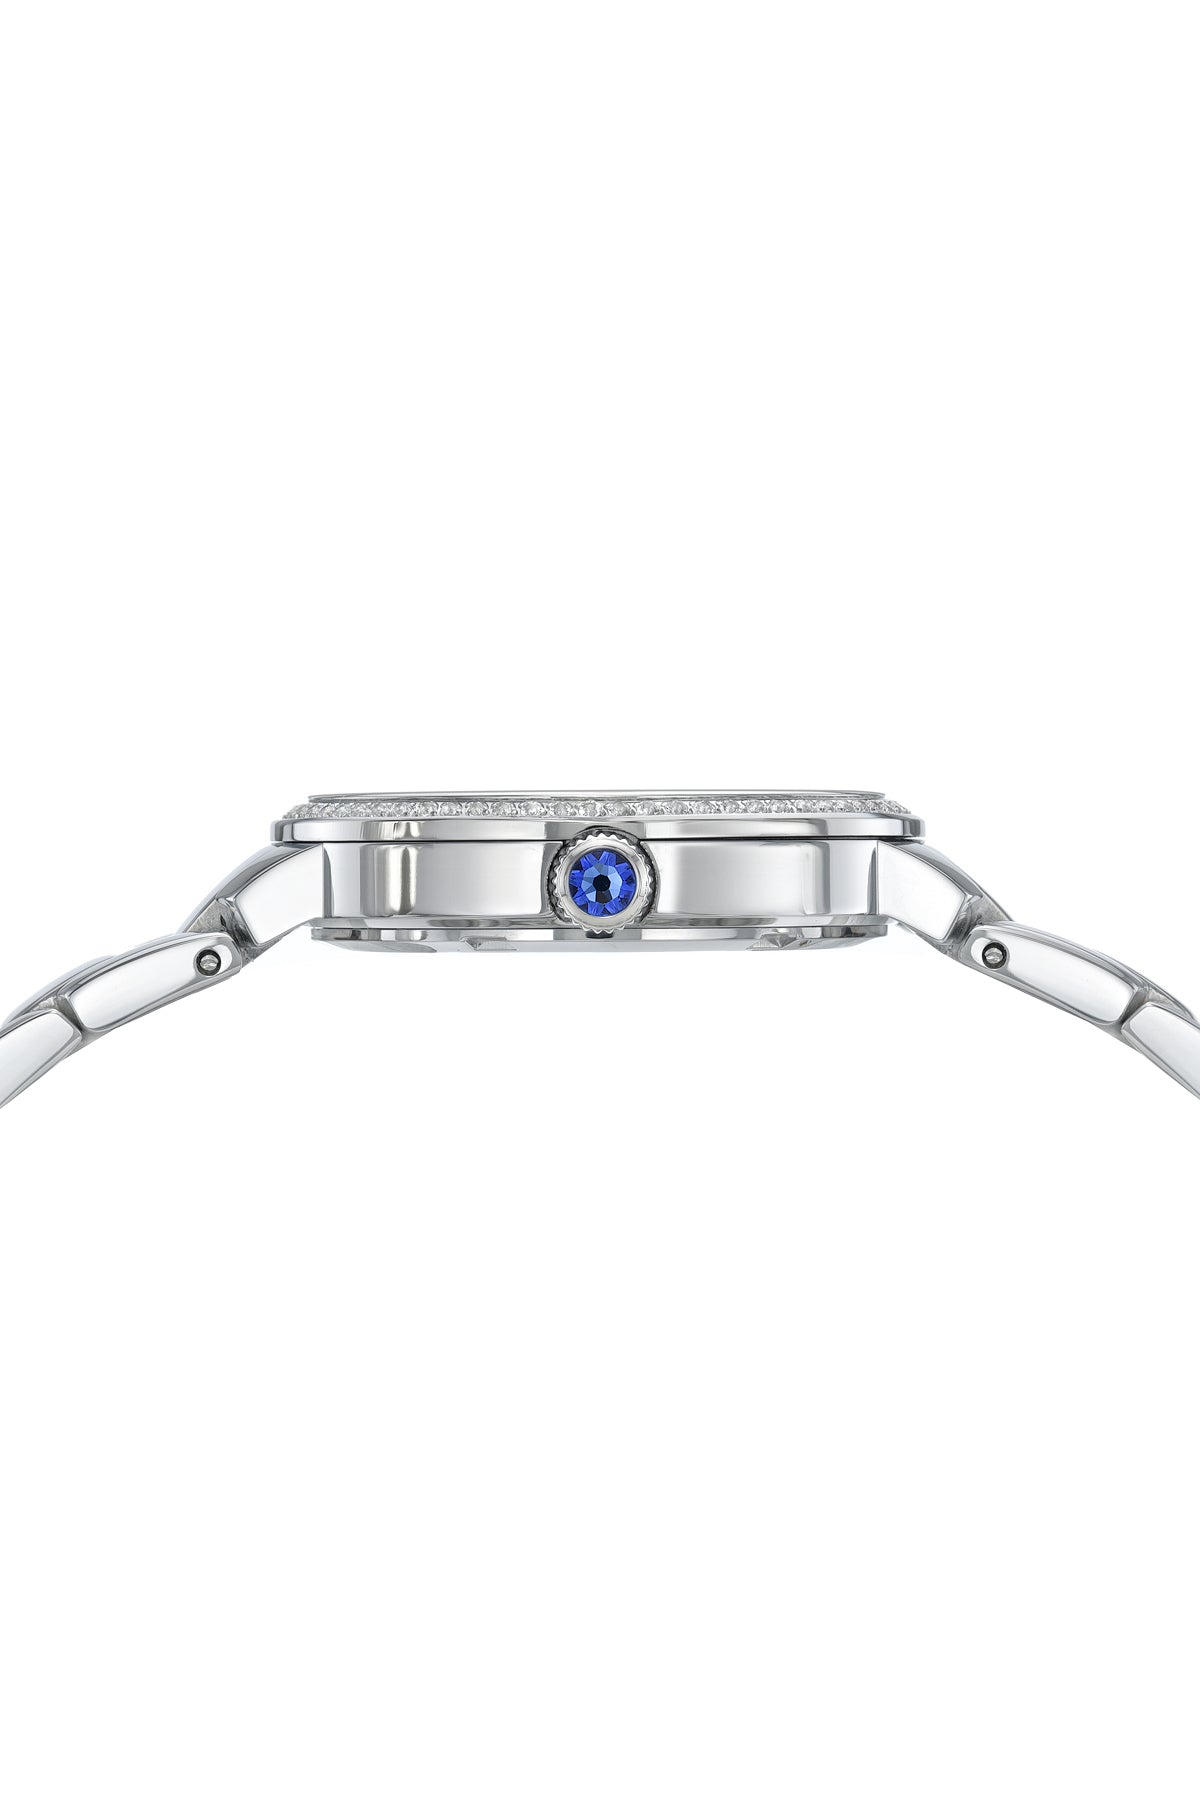 Porsamo Bleu Luna Luxury Topaz Women's Stainless Steel Watch, Silver, White Enamel Dial 1181ELUS